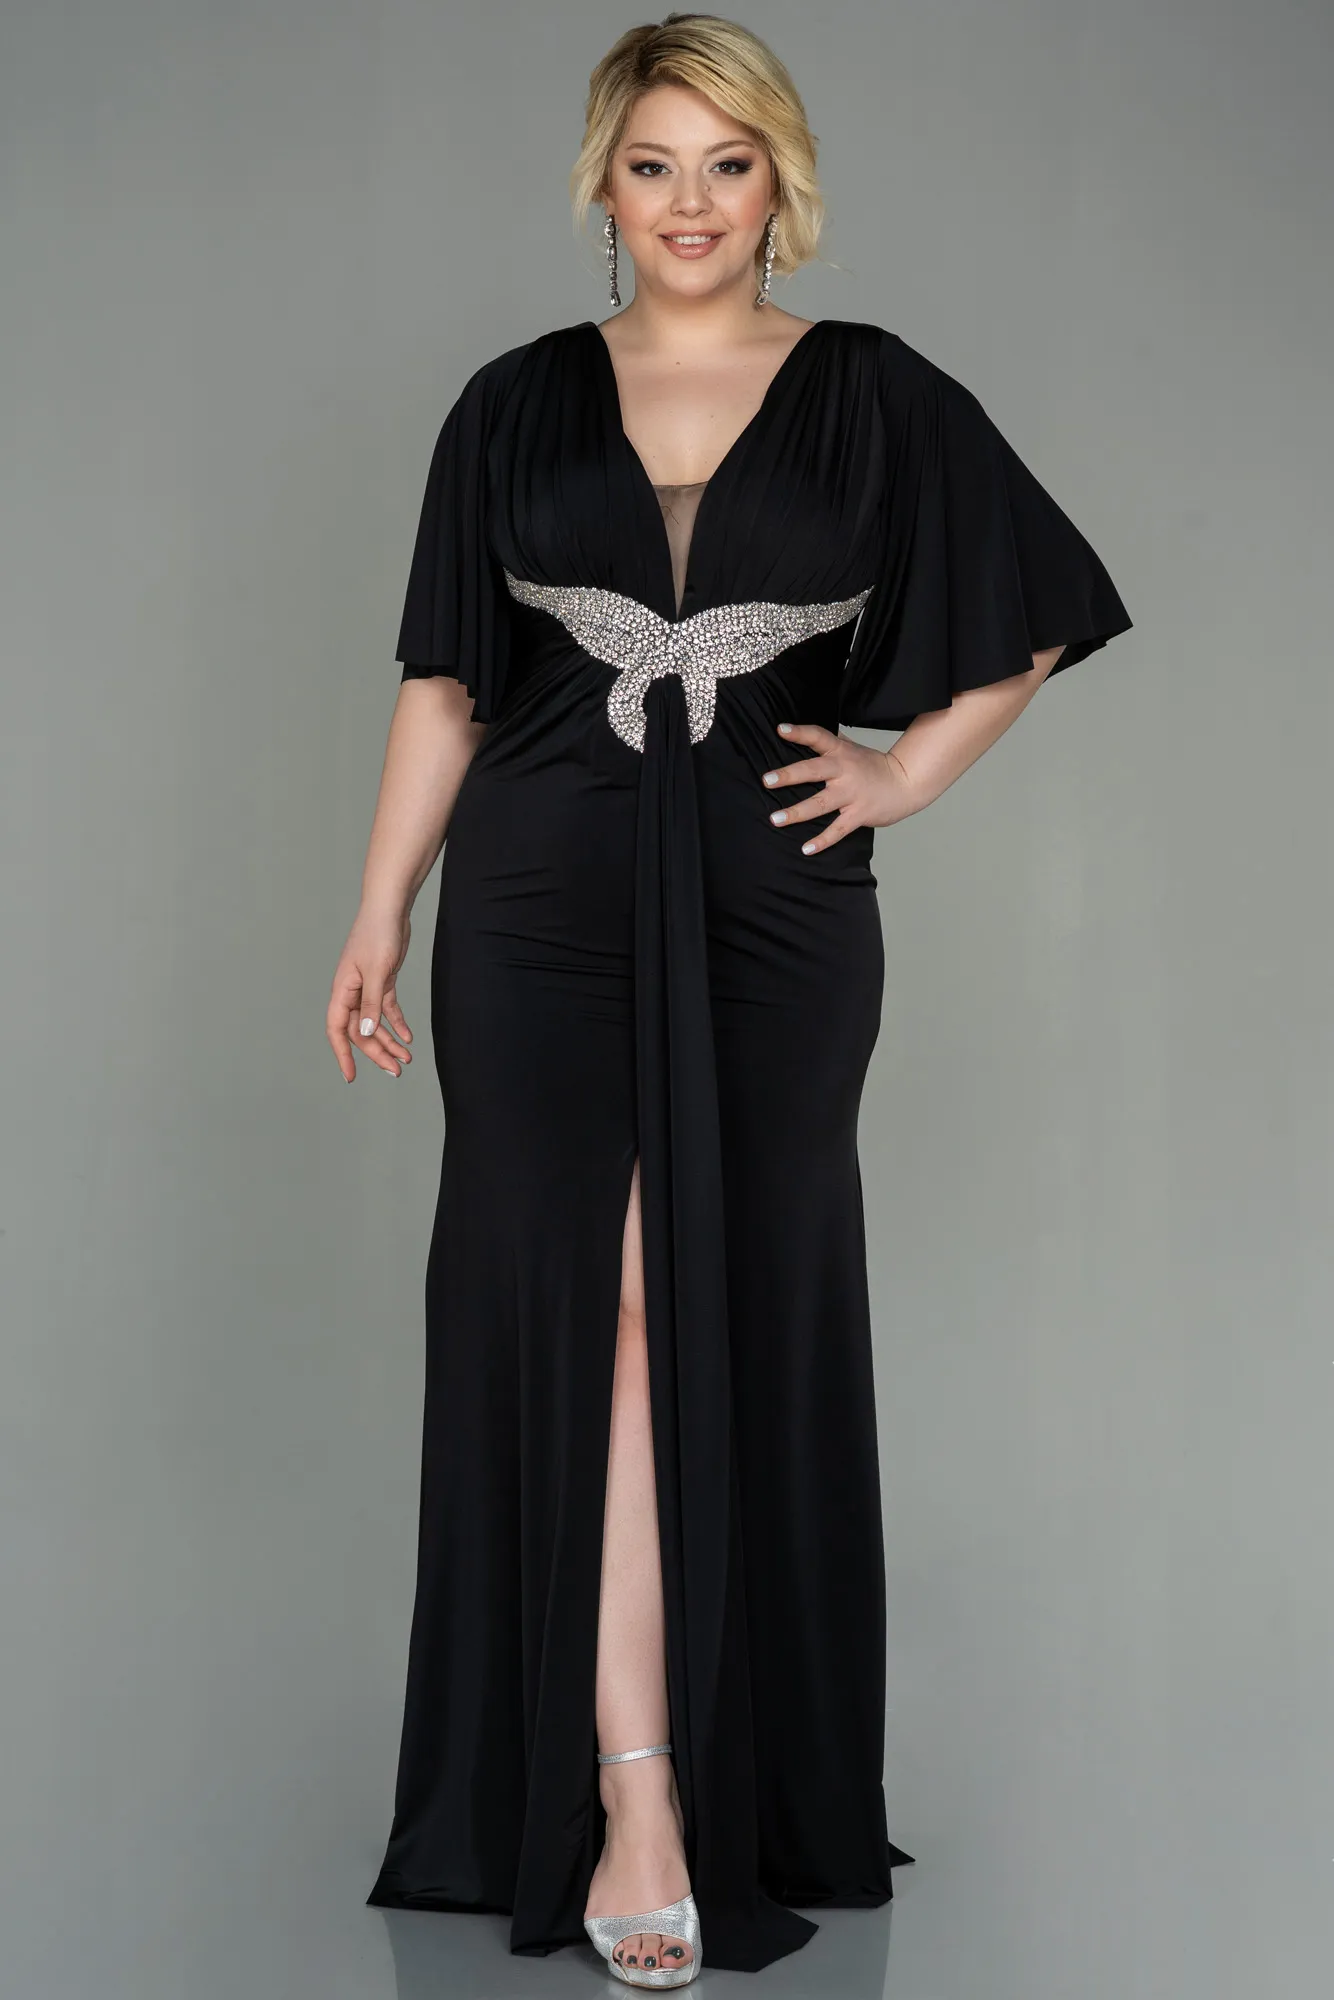 Black-Long Plus Size Evening Dress ABU3015